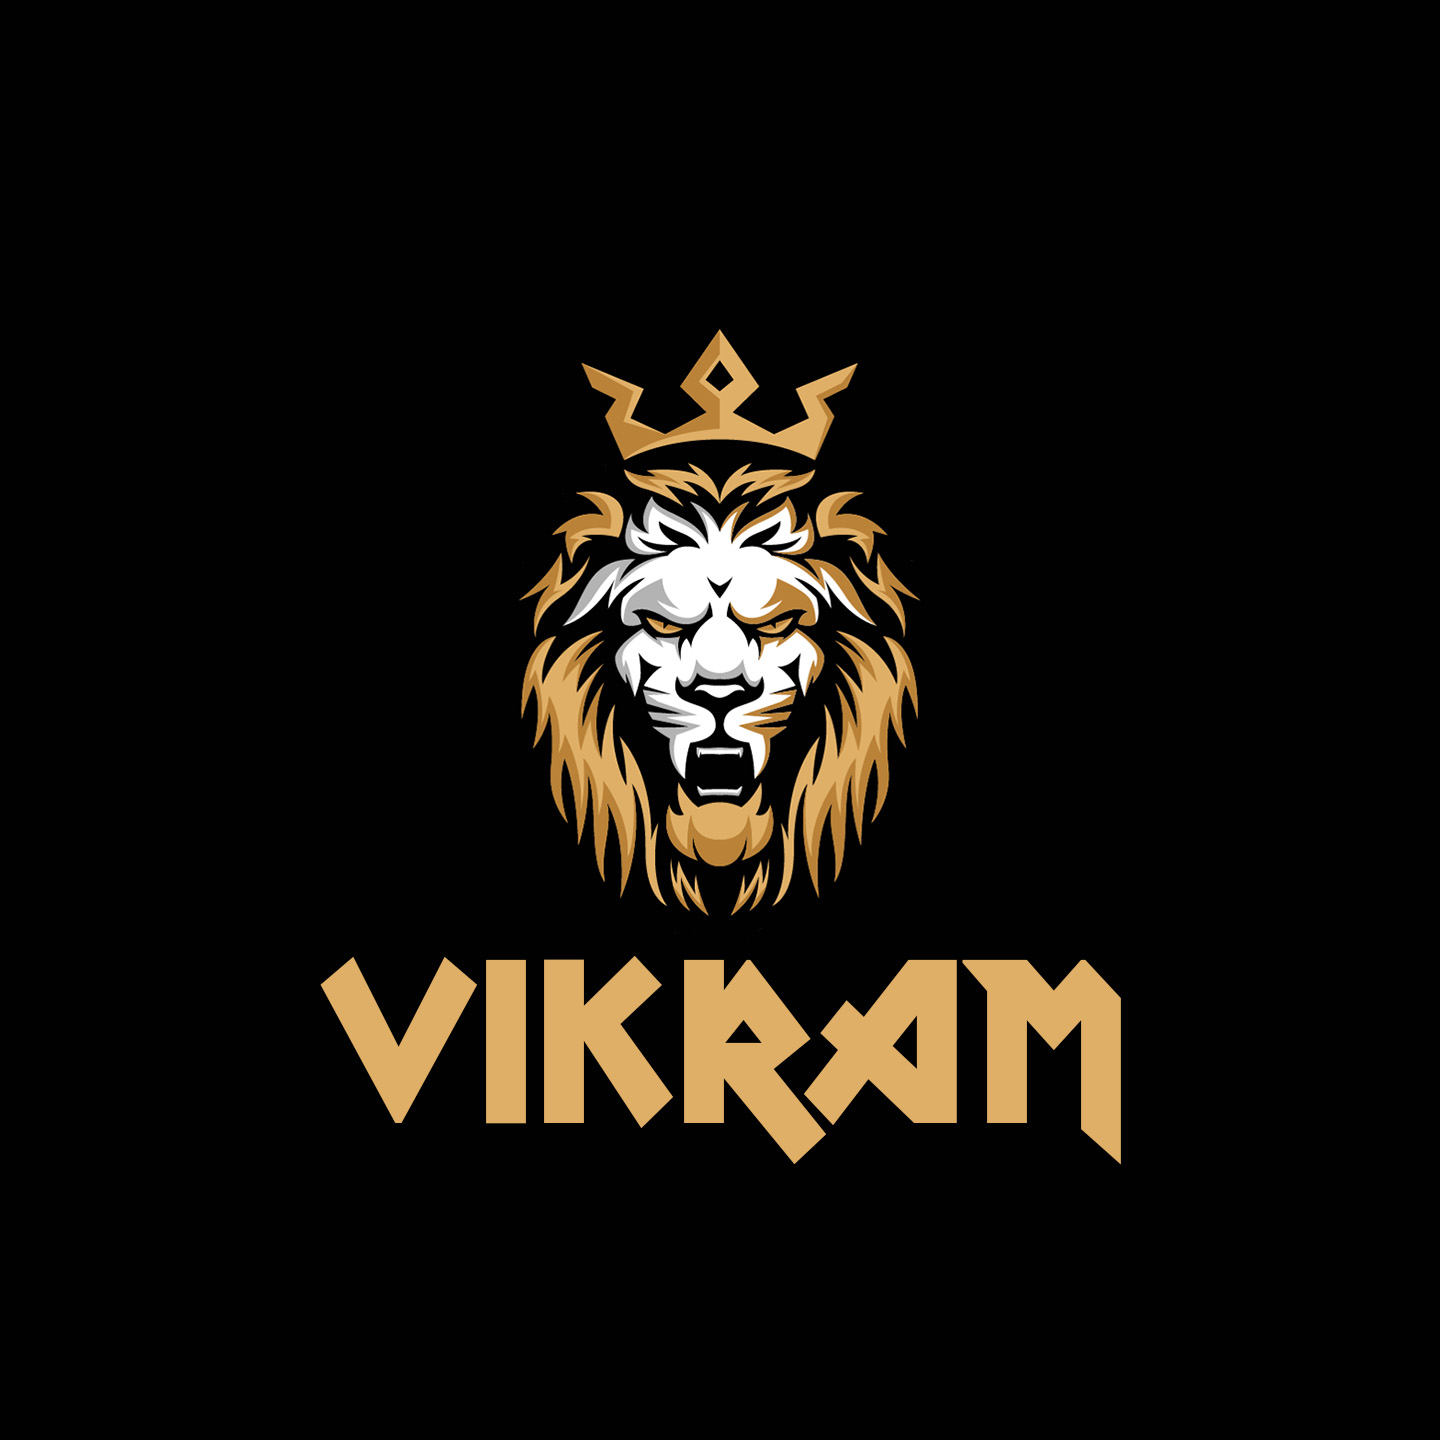 vikram name status - YouTube